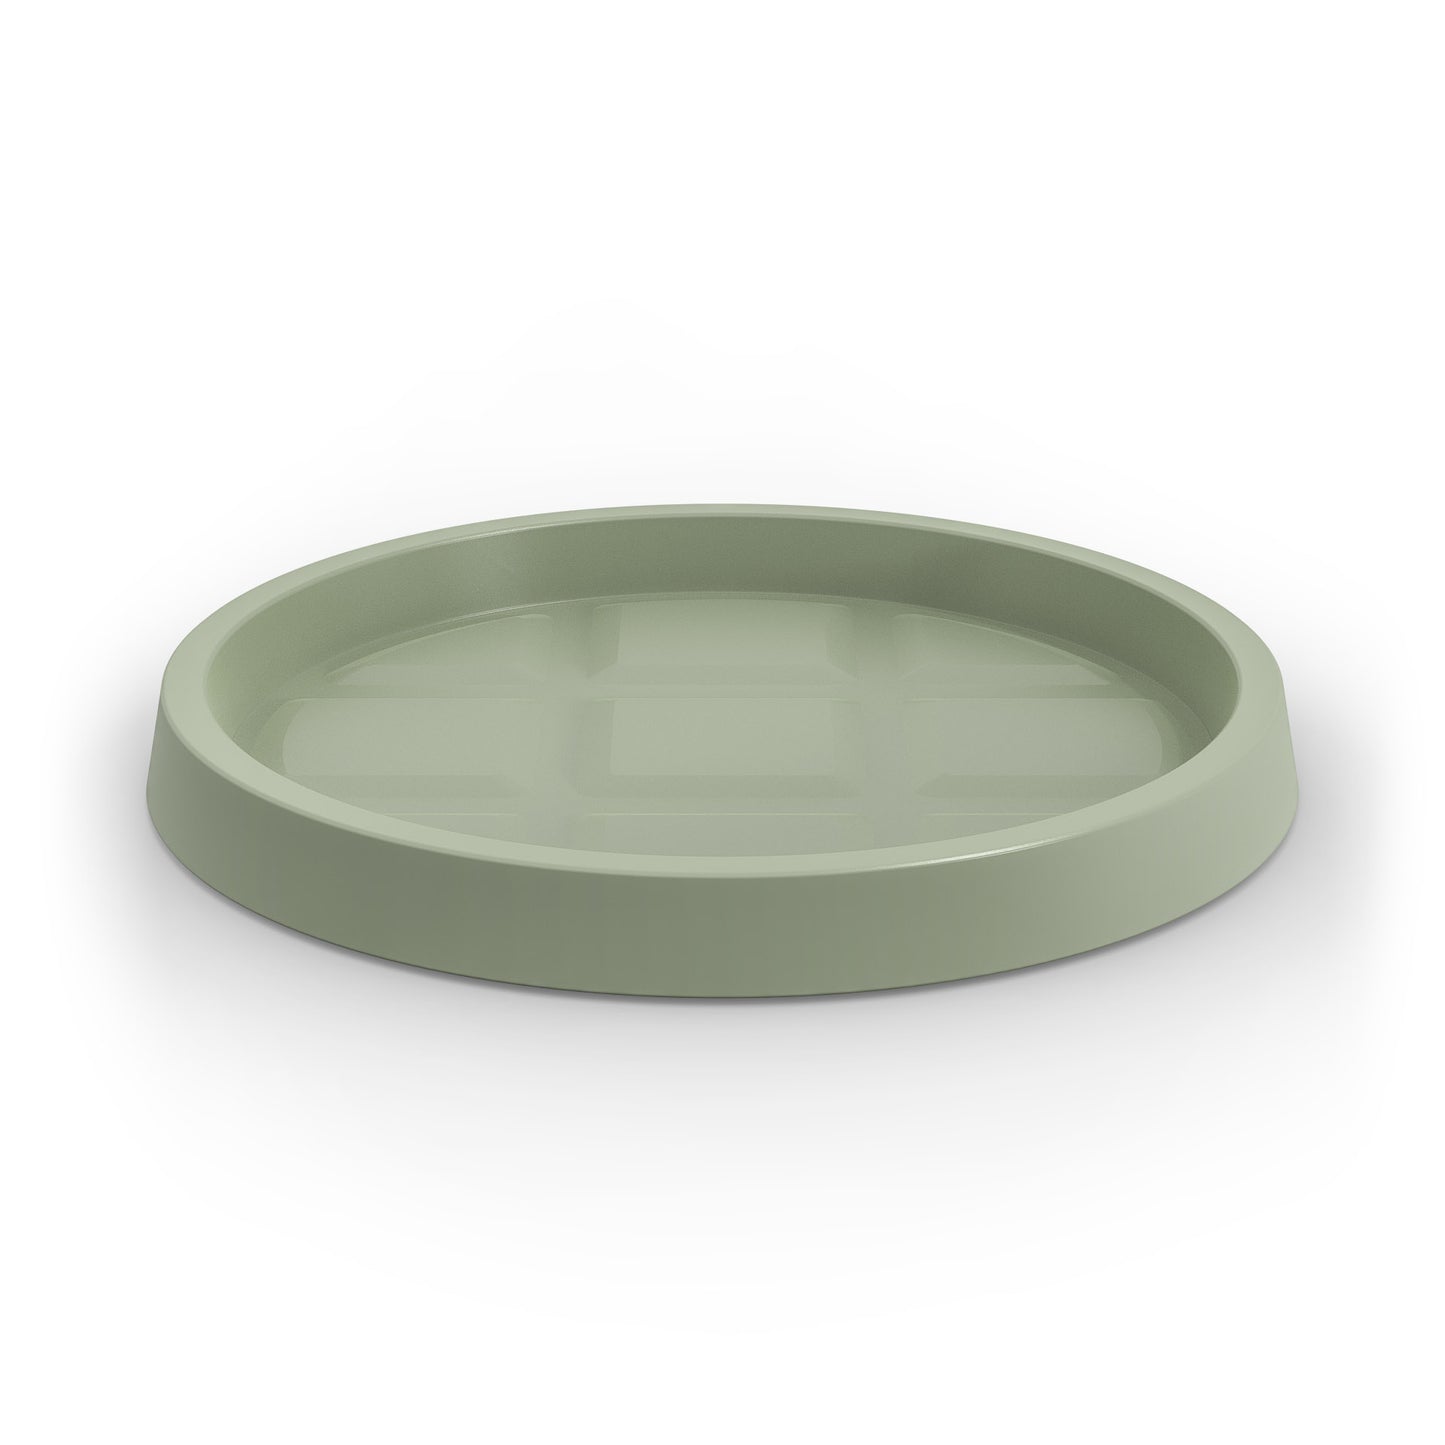 A light green saucer for Modscene planters pots.